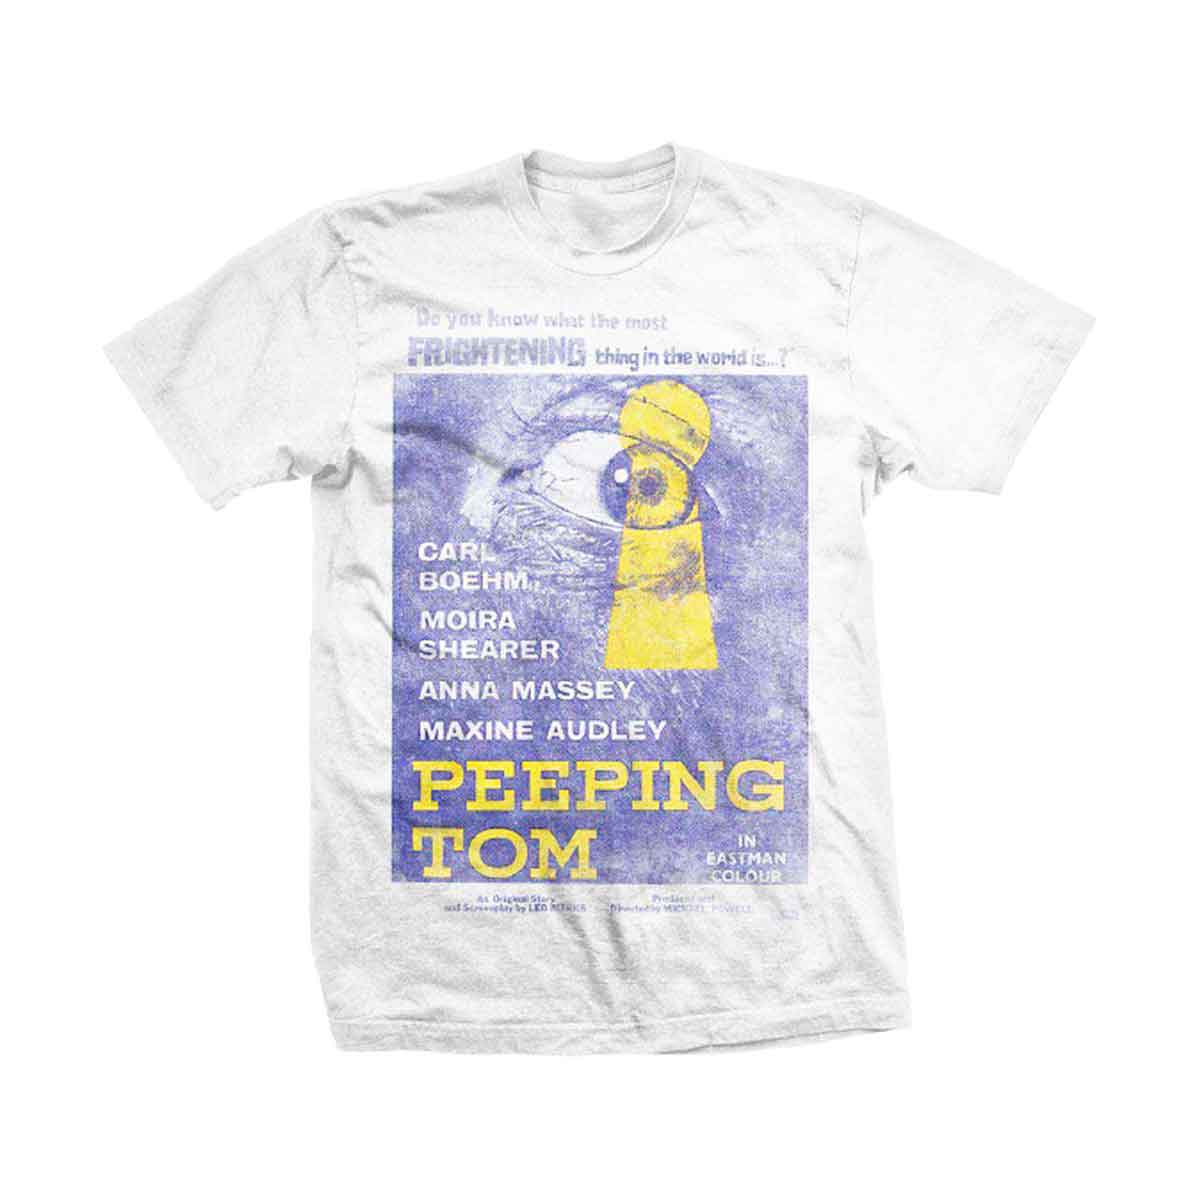 Peeping Tom ムービーTシャツ 血を吸うカメラ バンドTシャツの通販ショップ『Tee-Merch!』